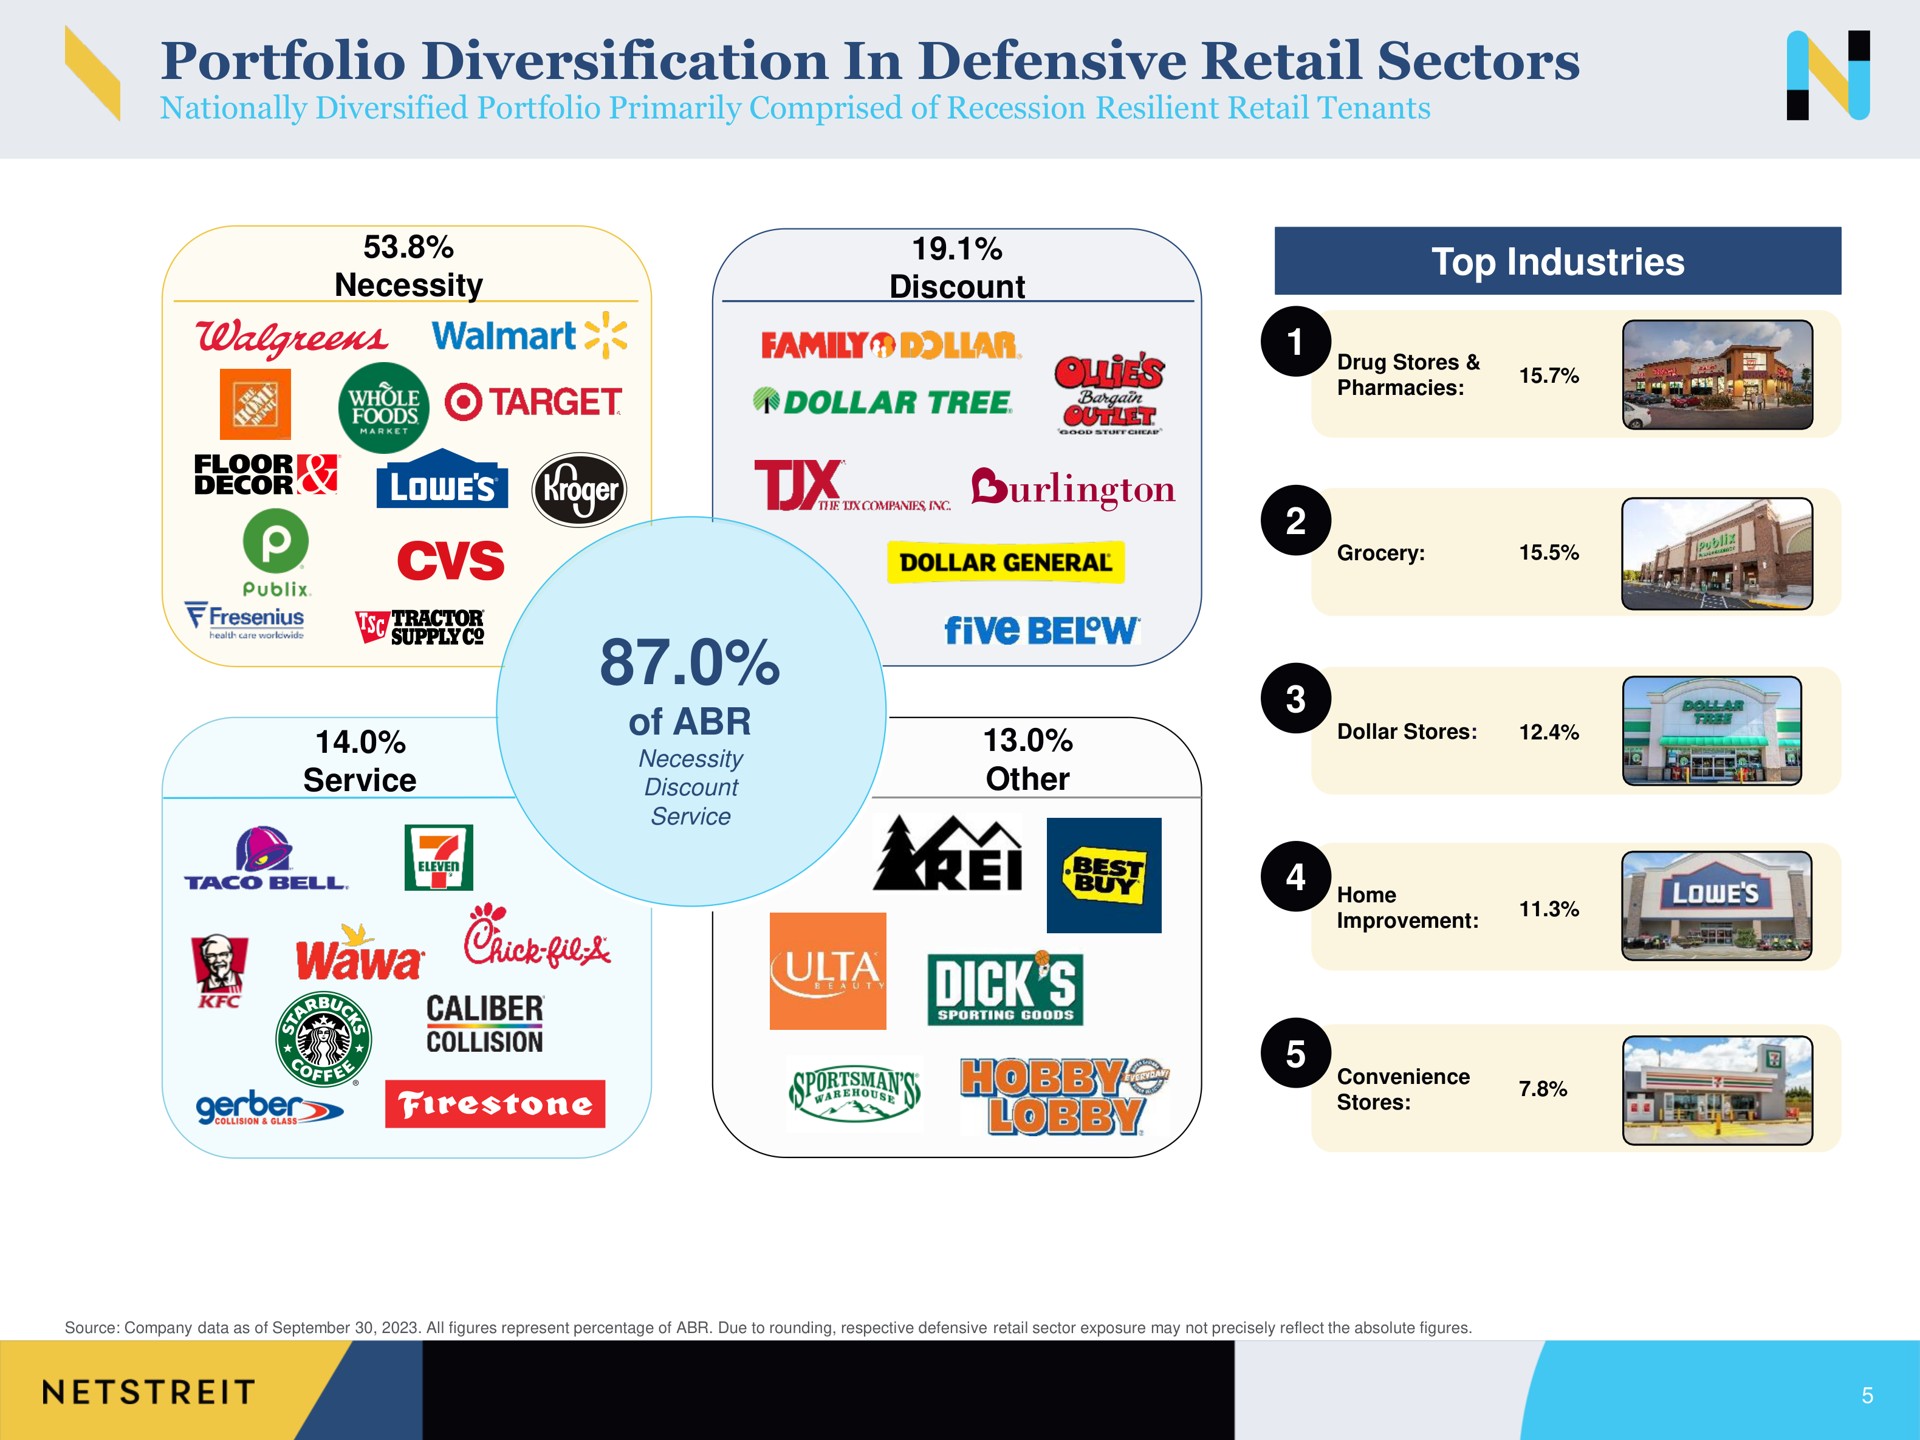 portfolio diversification in defensive retail sectors of top industries ges target dollar tree pharmacies cee dollar general wawa | Netstreit